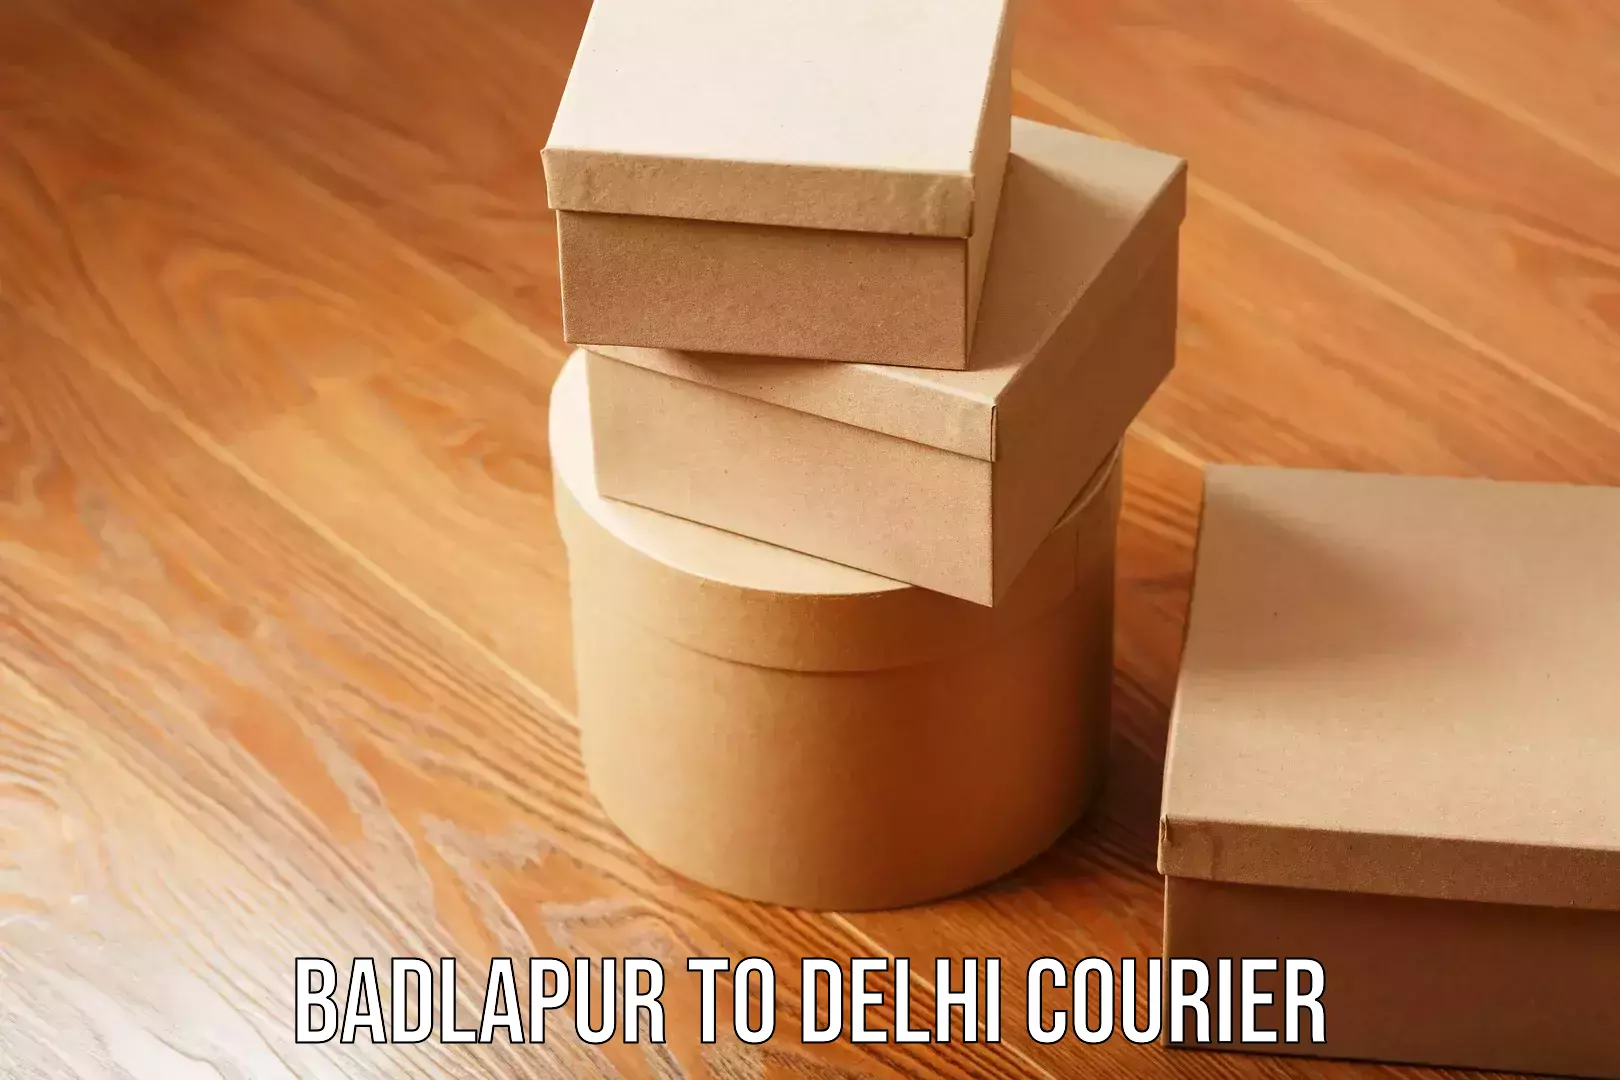 Nationwide delivery network Badlapur to Delhi